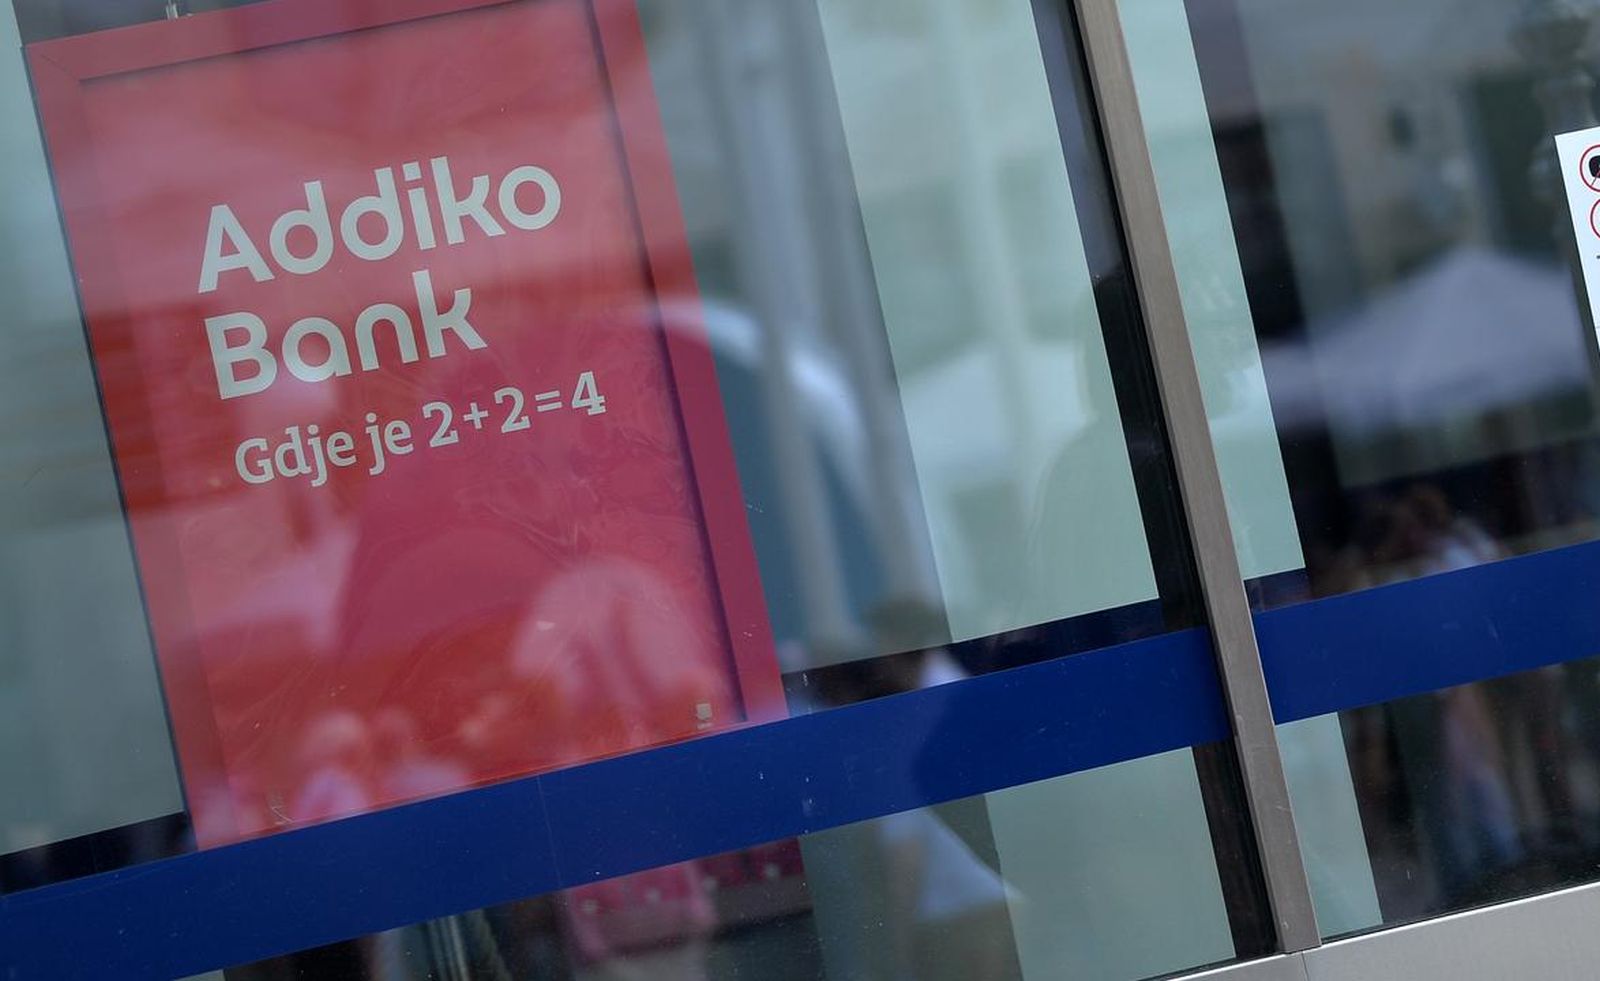 20.07.2016., Zagreb - Hypo Alpe-Adria banka promijenila ime u Addiko bank. "nPhoto: Marko Lukunic/PIXSELL